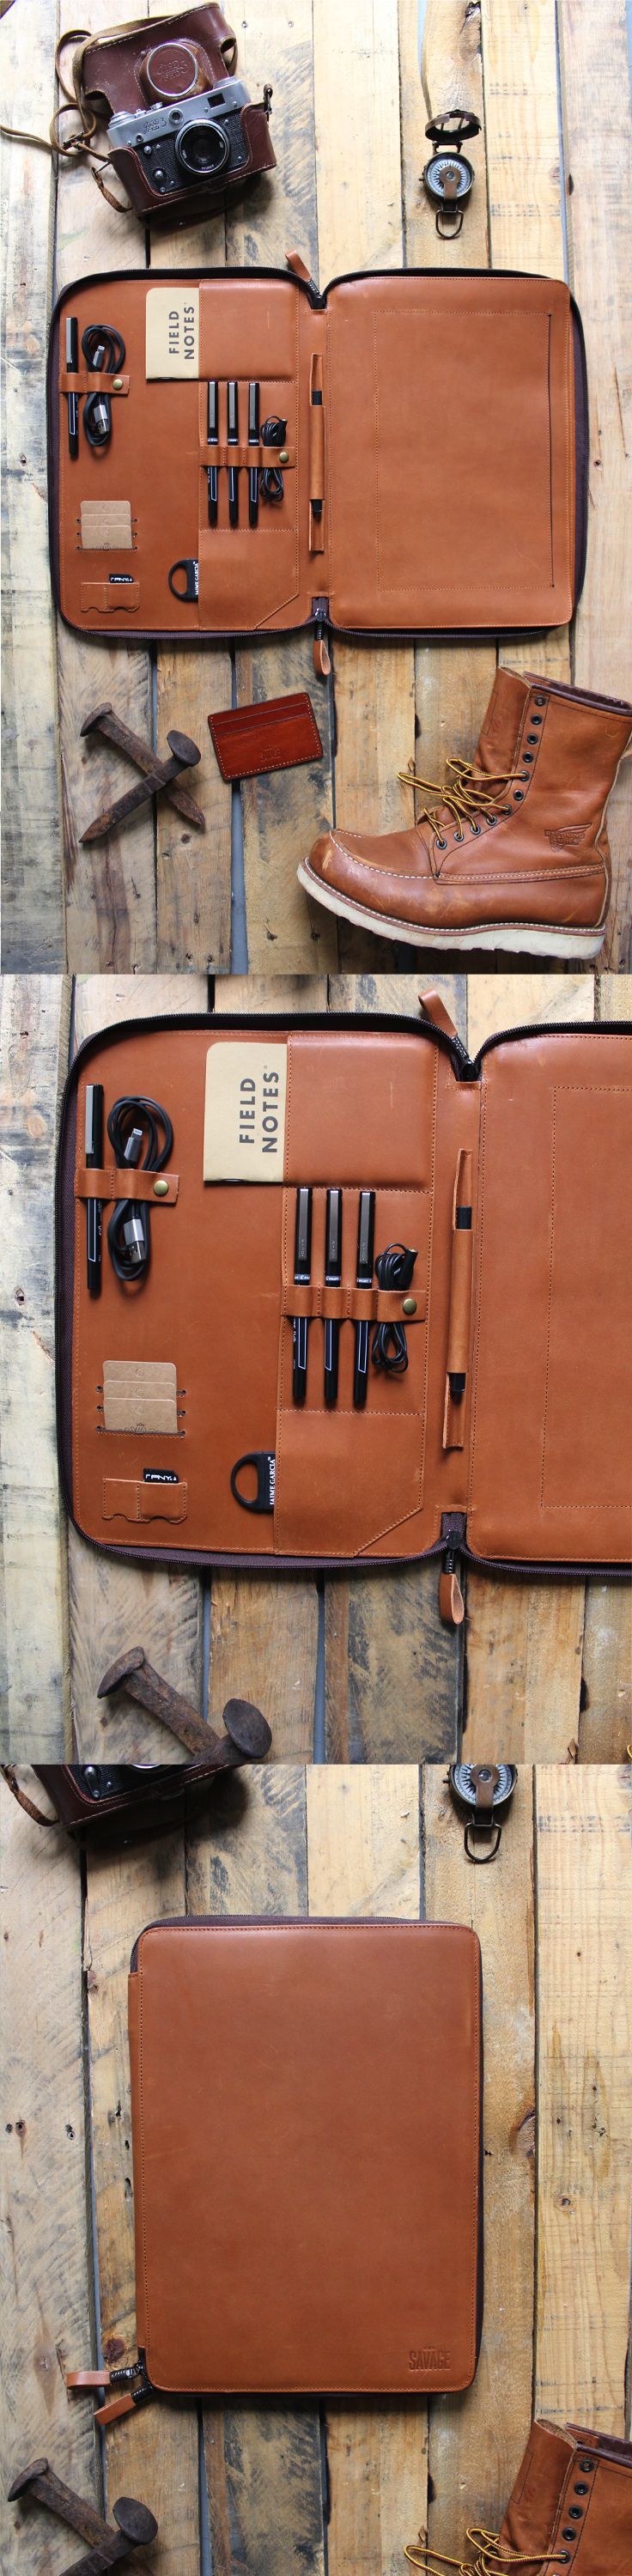 Cognac apple air macbook case. Fits 13″ laptop plus iPad and all of your edc essentials